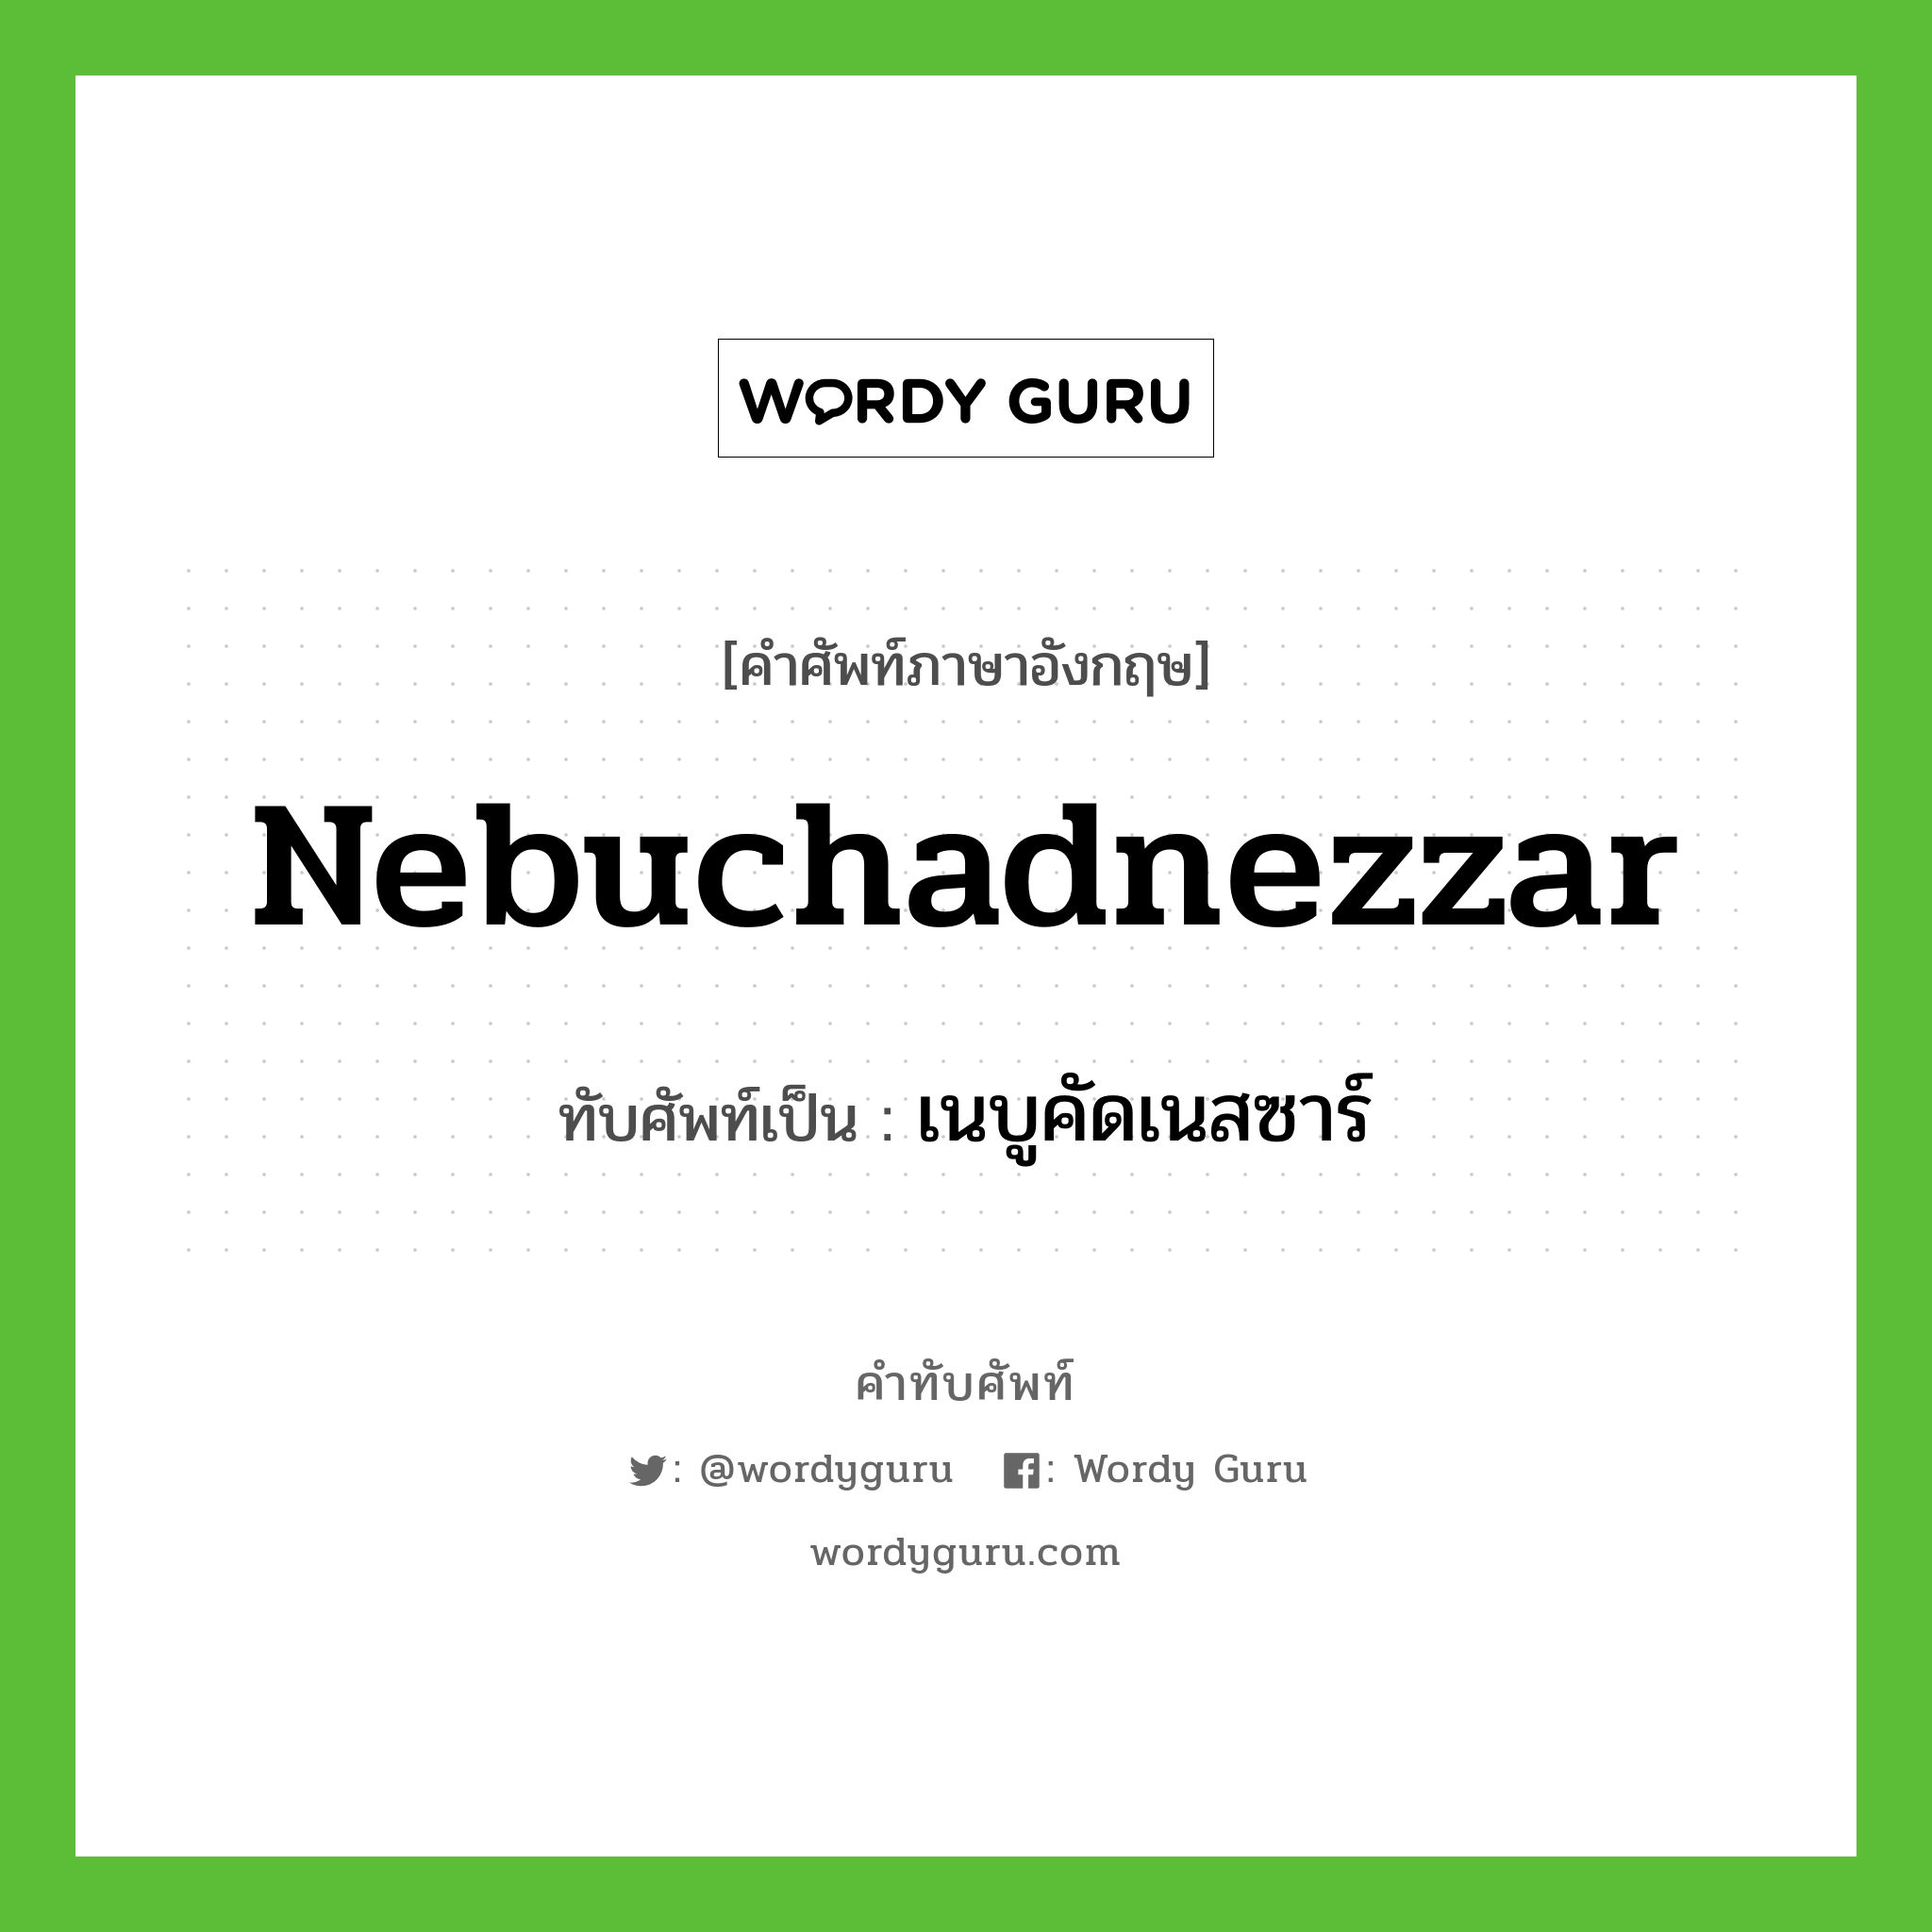 Nebuchadnezzar เขียนเป็นคำไทยว่าอะไร?, คำศัพท์ภาษาอังกฤษ Nebuchadnezzar ทับศัพท์เป็น เนบูคัดเนสซาร์